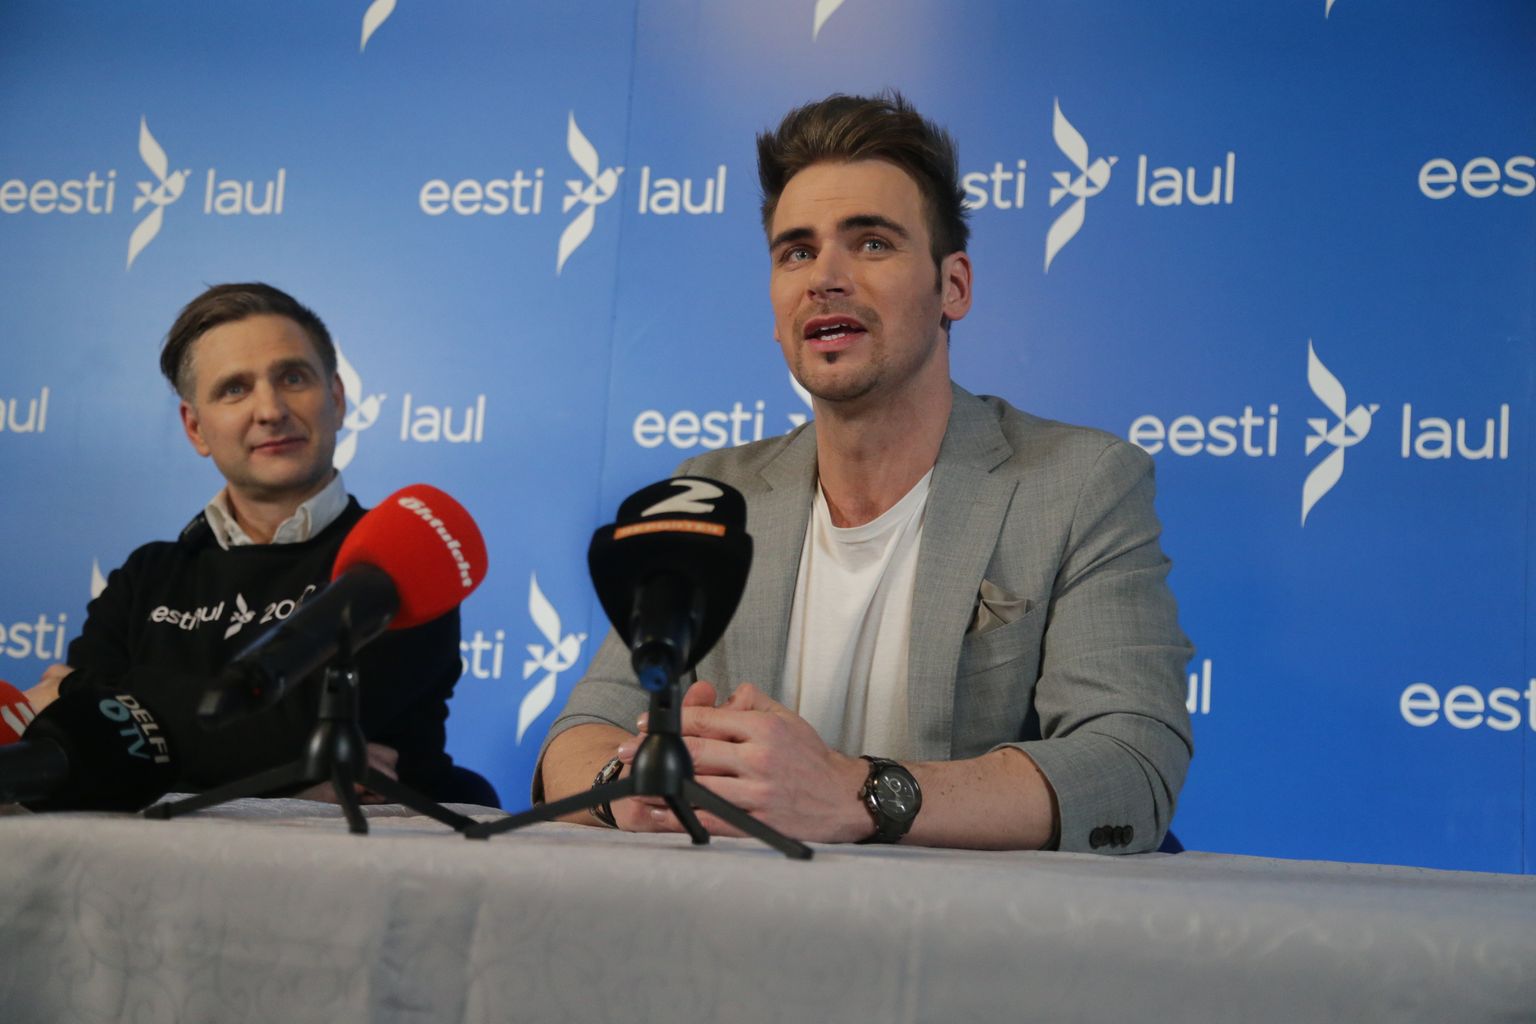 Уку Сувисте на пресс-конференции победителя Eesti Laul 2020